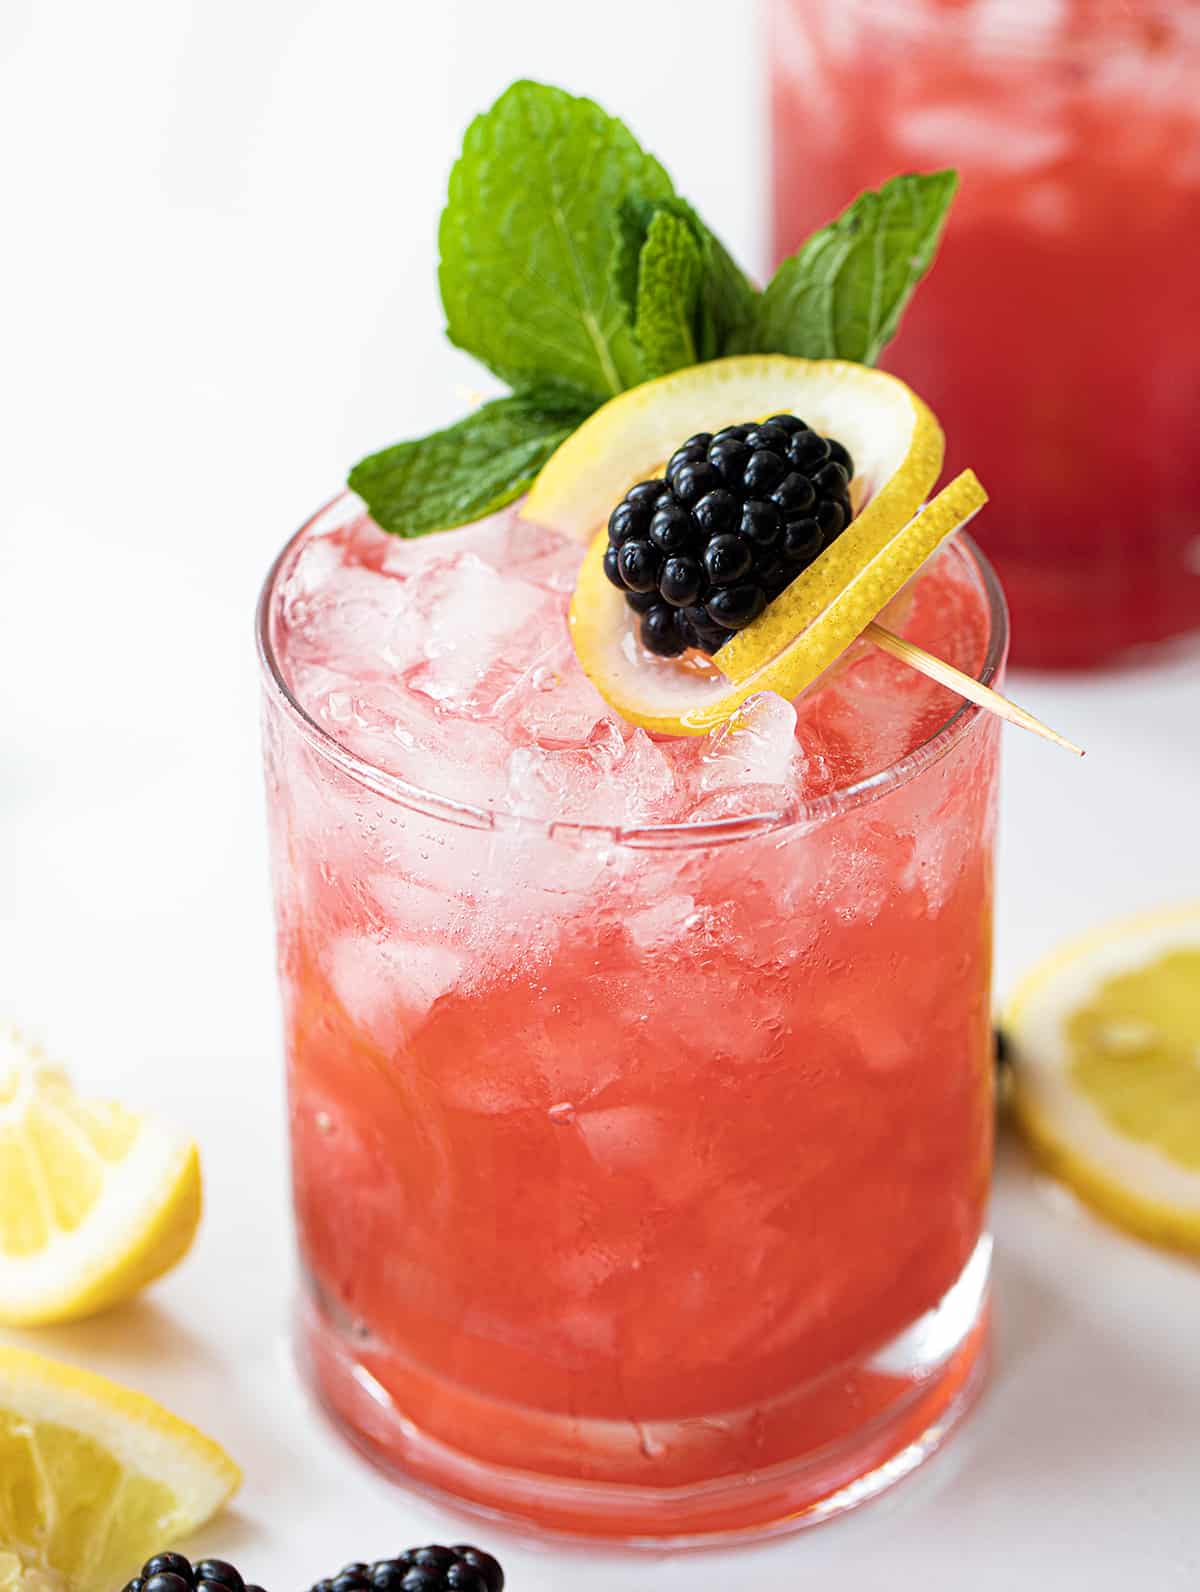 Blackberry Fizz Cocktails on a White Counter with Blackberry Lemon Garnish.